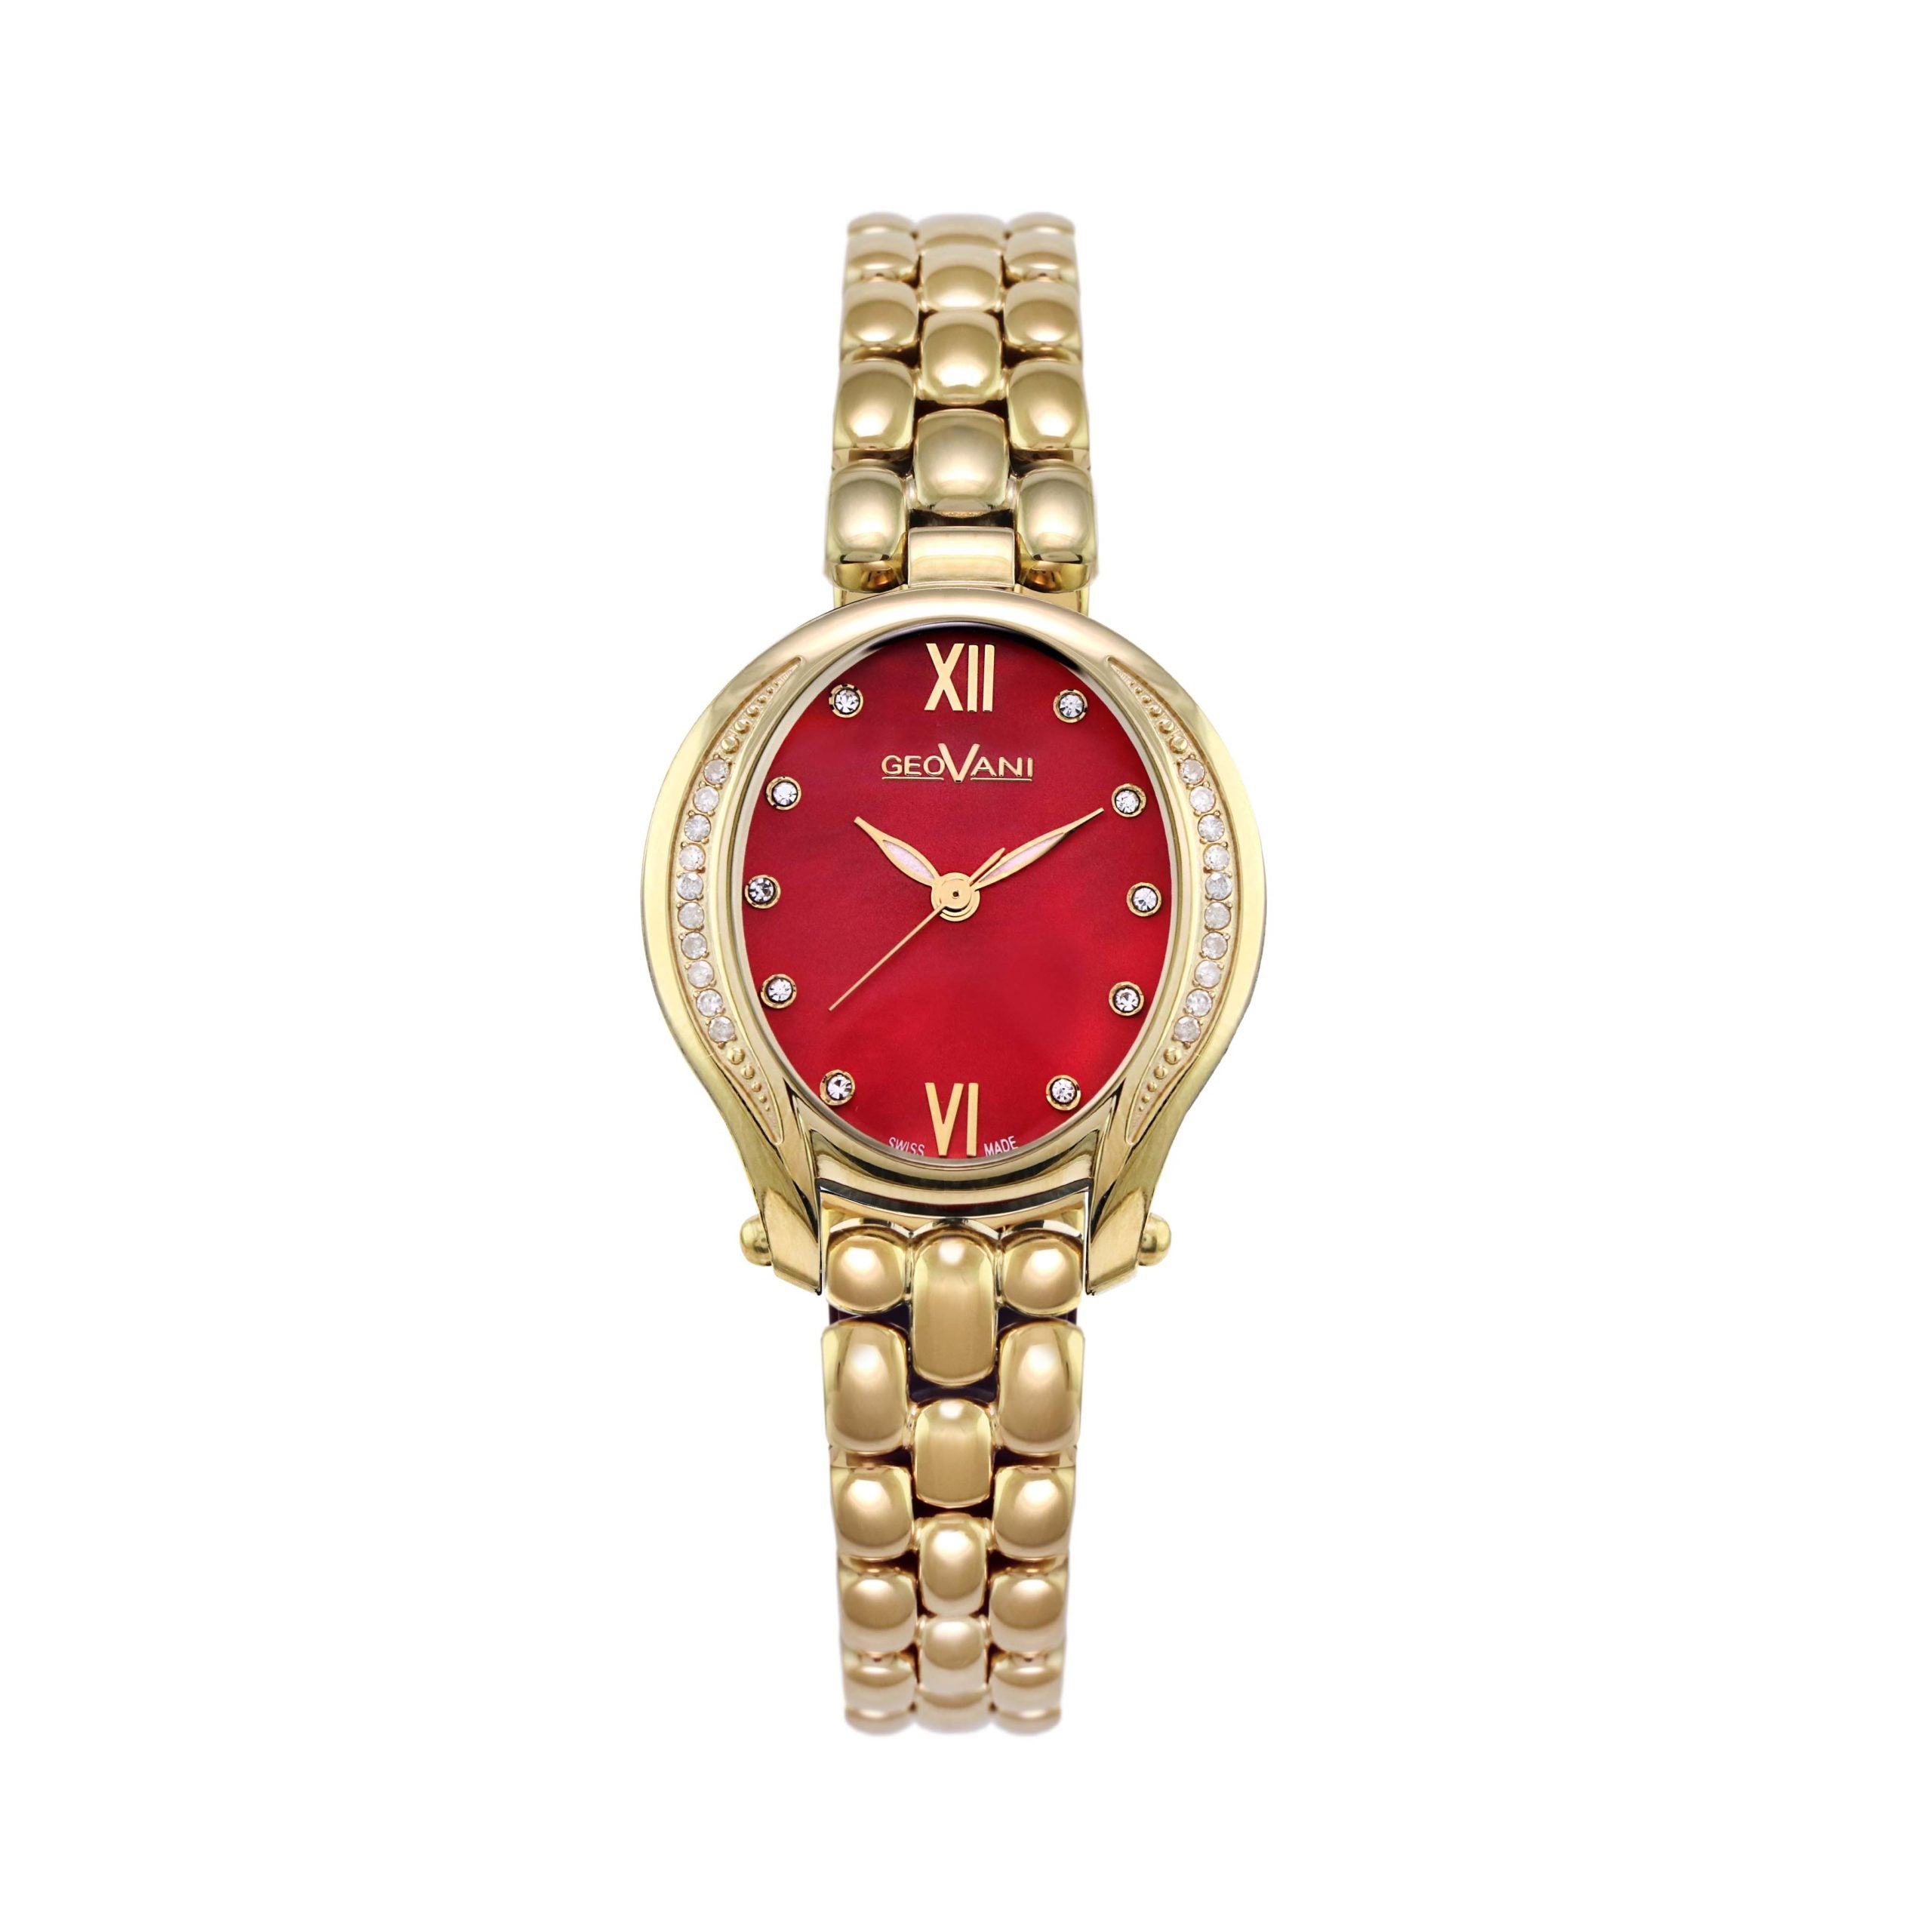 Giovanni Women's Swiss Quartz Watch with Red Dial - GEO-0010